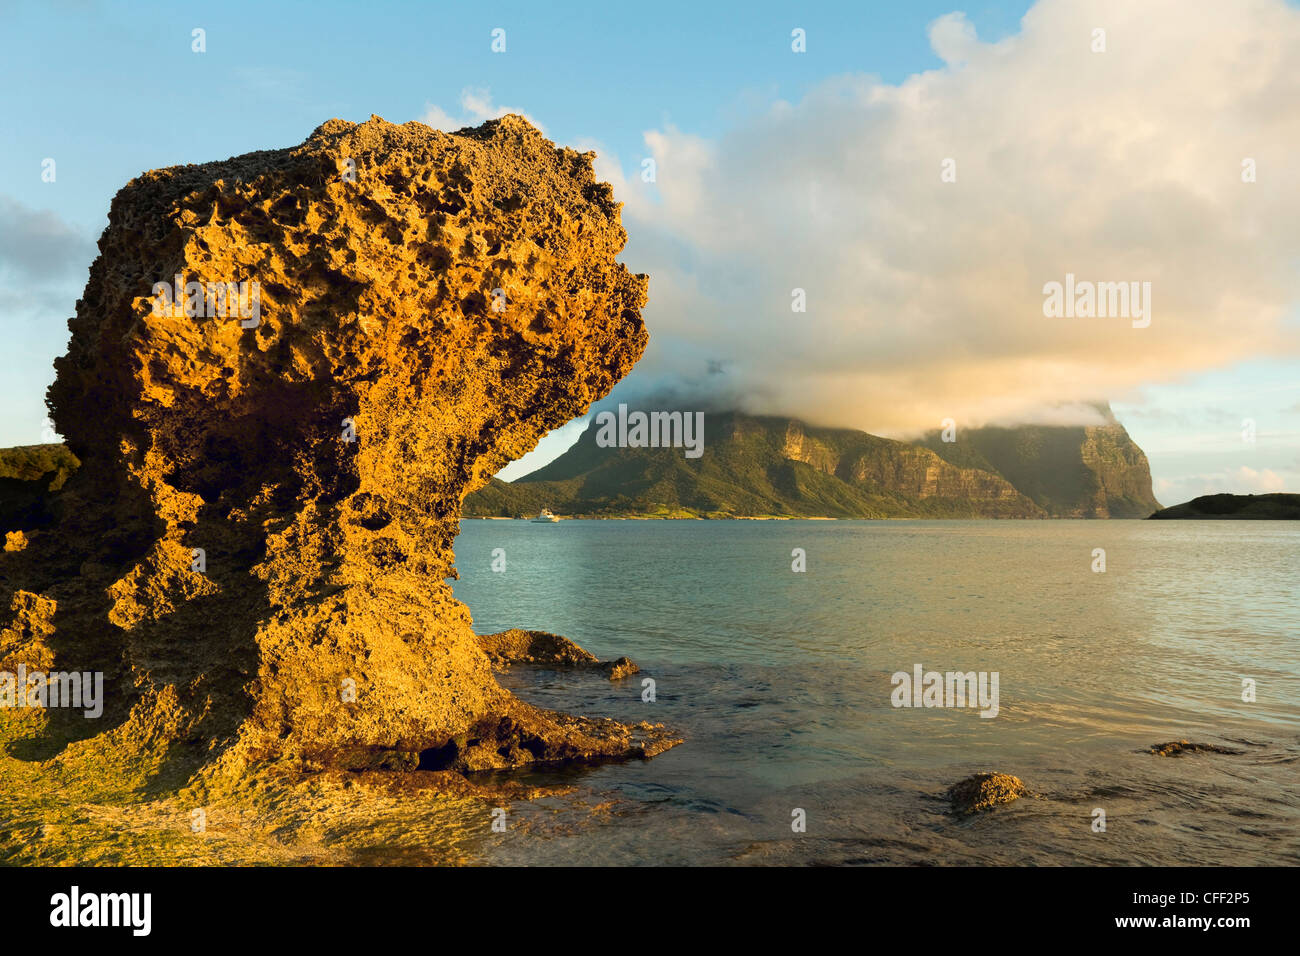 Sedimentgestein Rock mit Mount Lidgbird und Mount Gower, Tasmansee, Lord-Howe-Insel, New-South.Wales, Australien Ozean. Stockfoto